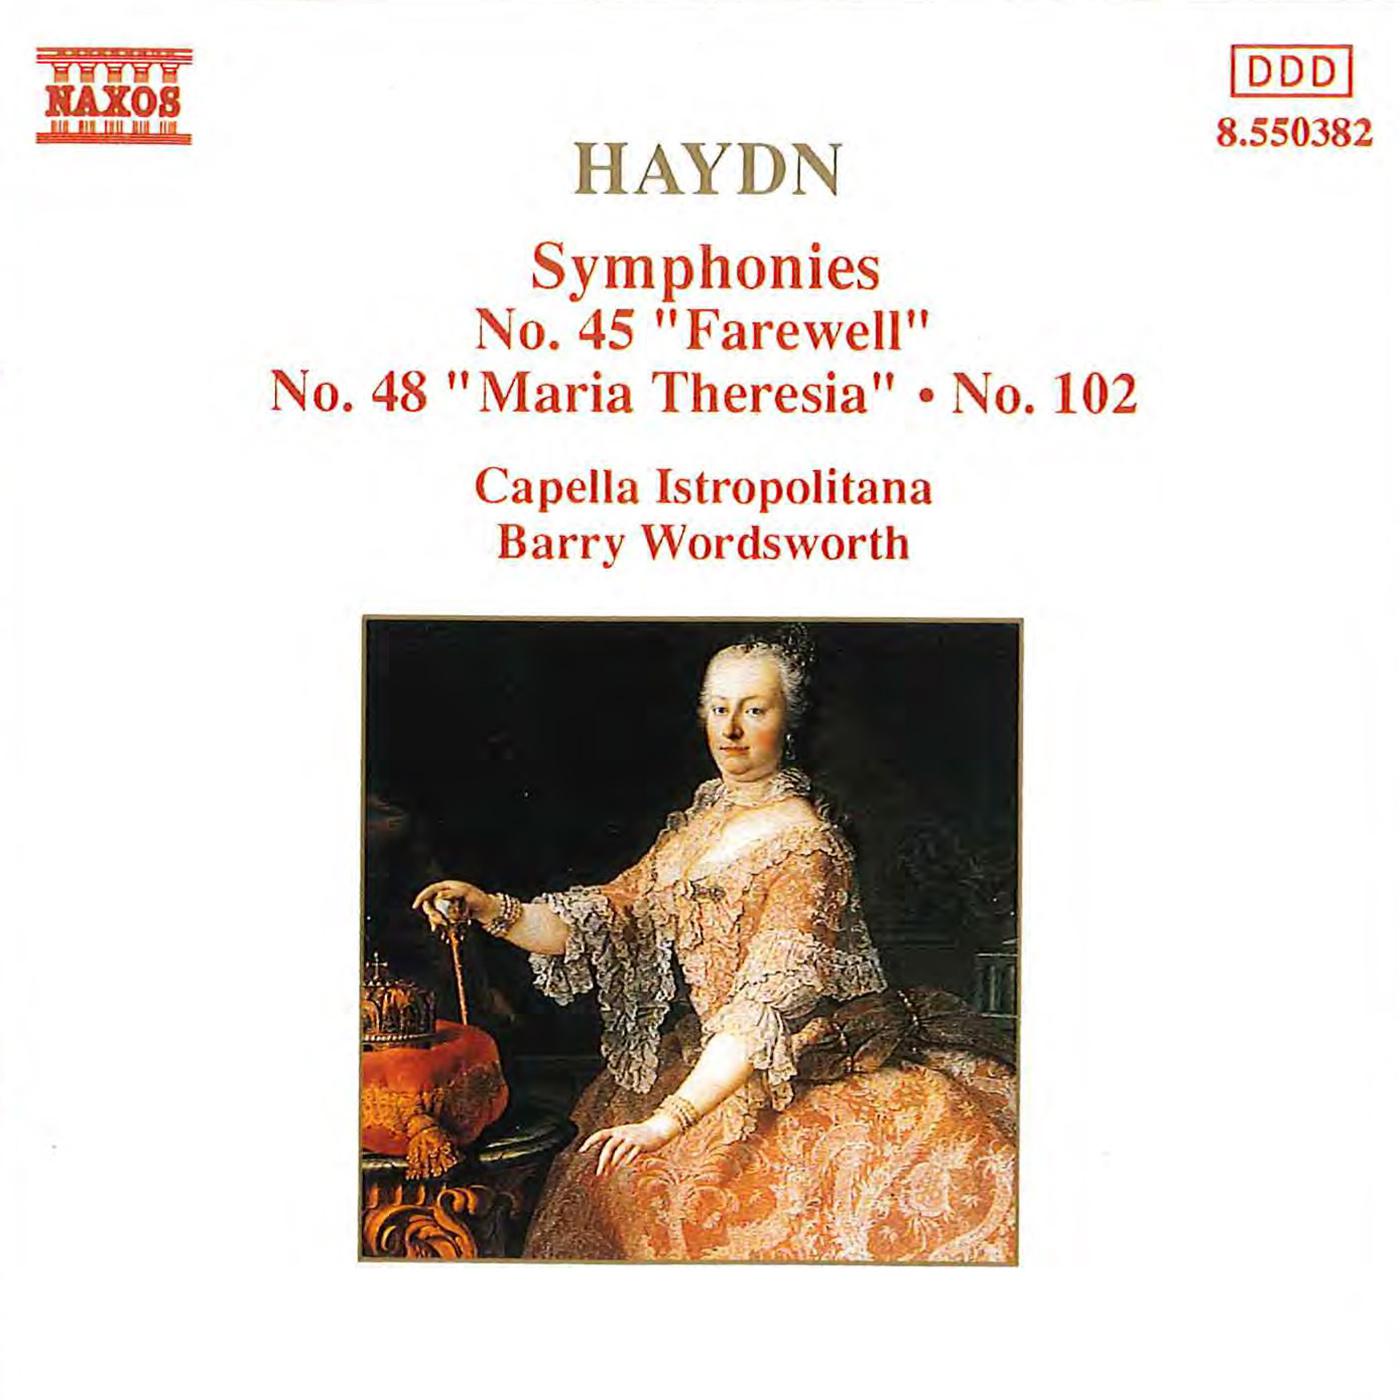 Symphony No. 48 in C Major, Hob.I:48, "Maria Theresa":III. Menuetto: Allegretto